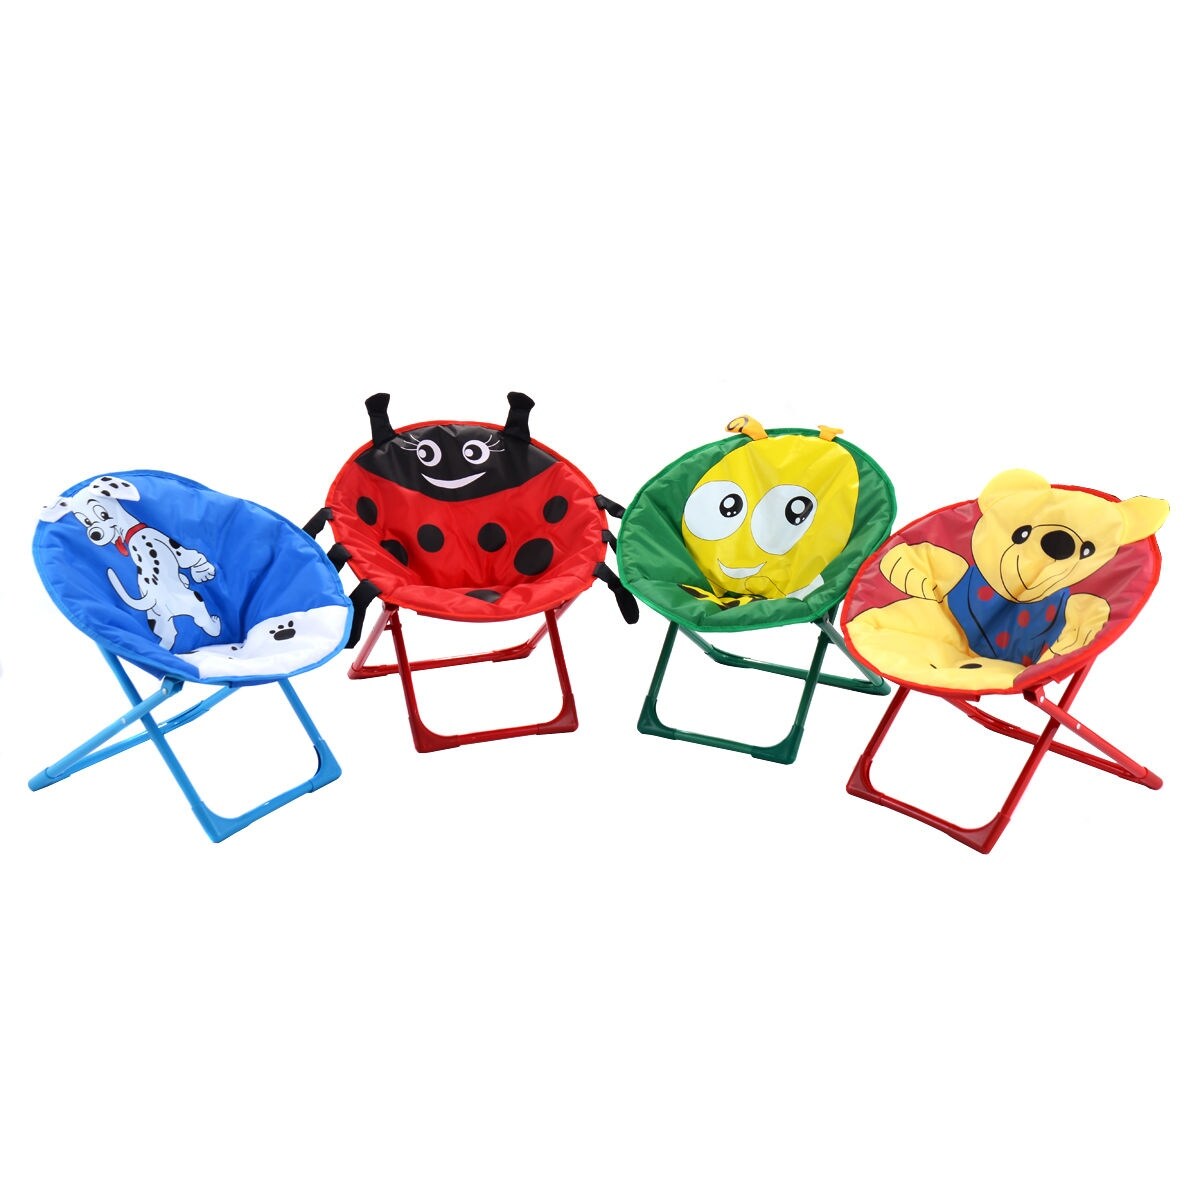 children's folding moon chairs